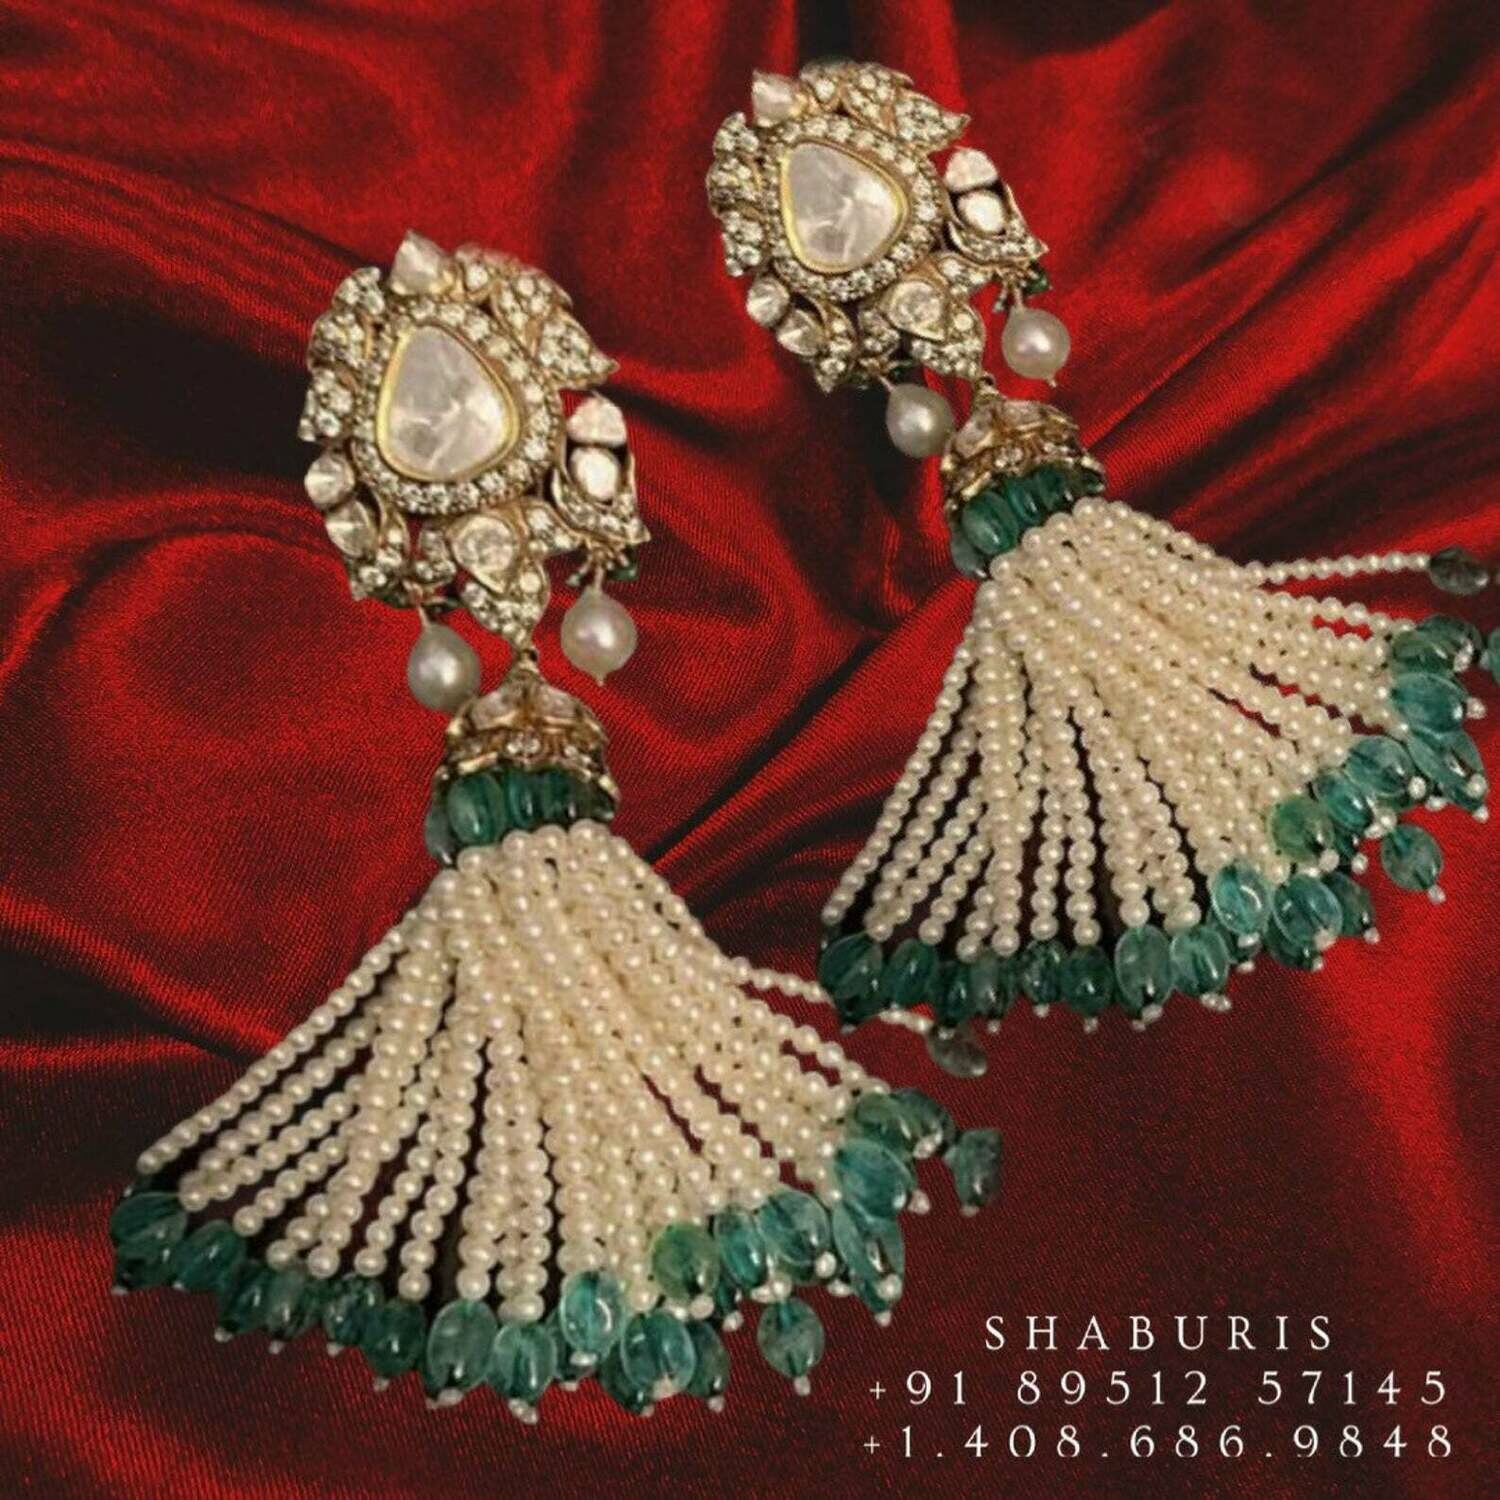 Pure silver jewely tassel earrings indian jewelry polki diamond jewelry pearl earrings cocktail earrings pearl jhumka - SHABURIS